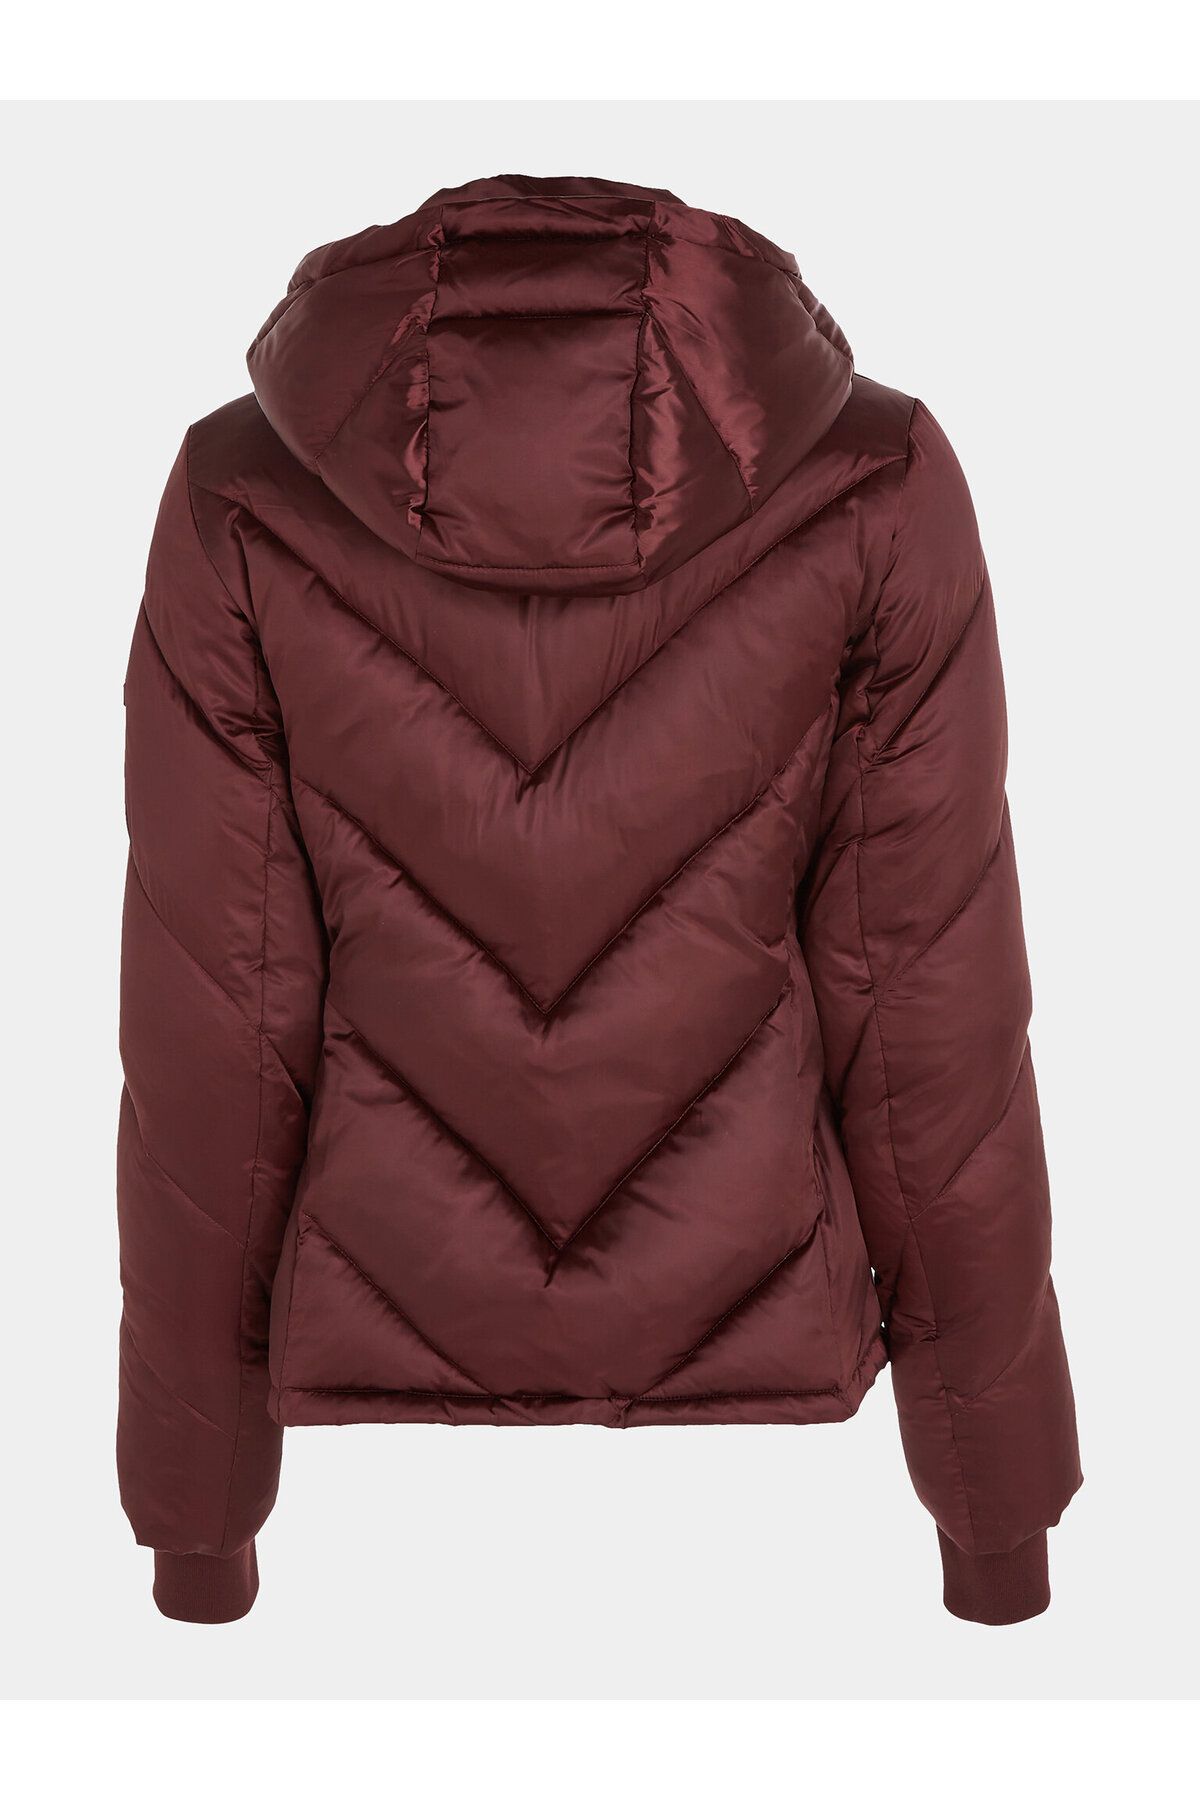 Klein - Winter Trendyol - Relaxed Calvin - fit Burgundy Jacket